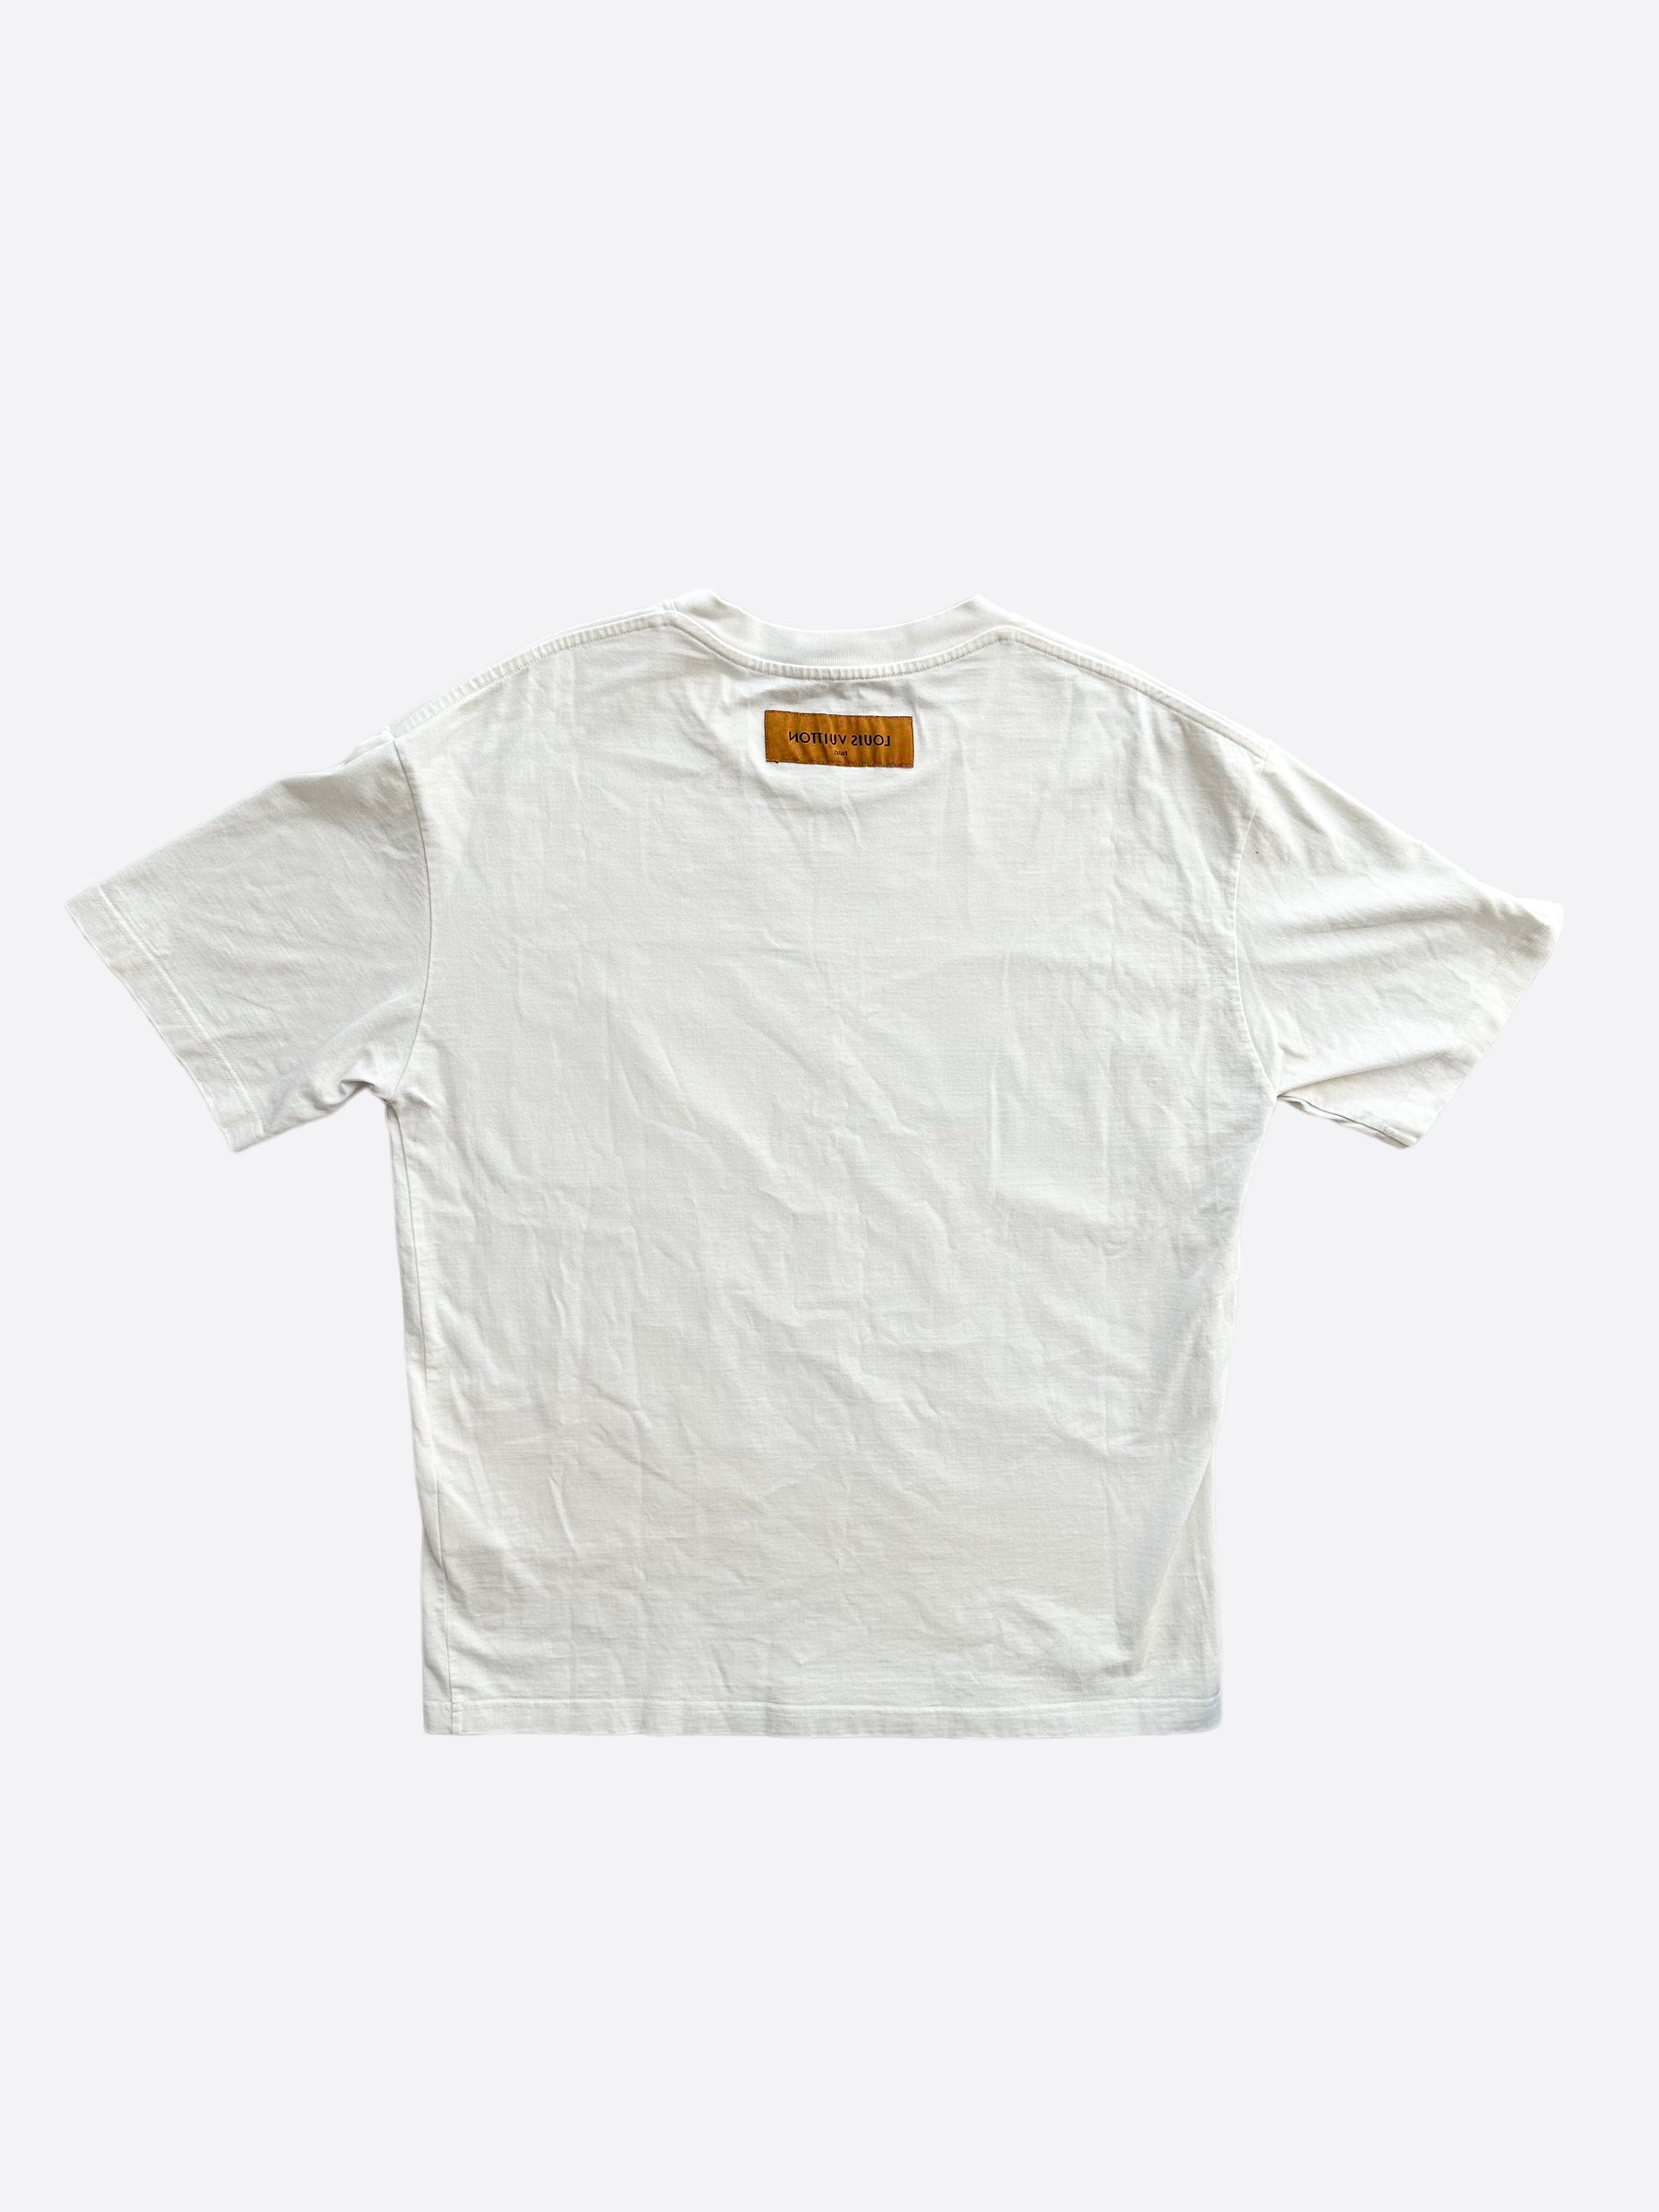 Louis Vuitton White Graffiti Logo T-Shirt – Savonches